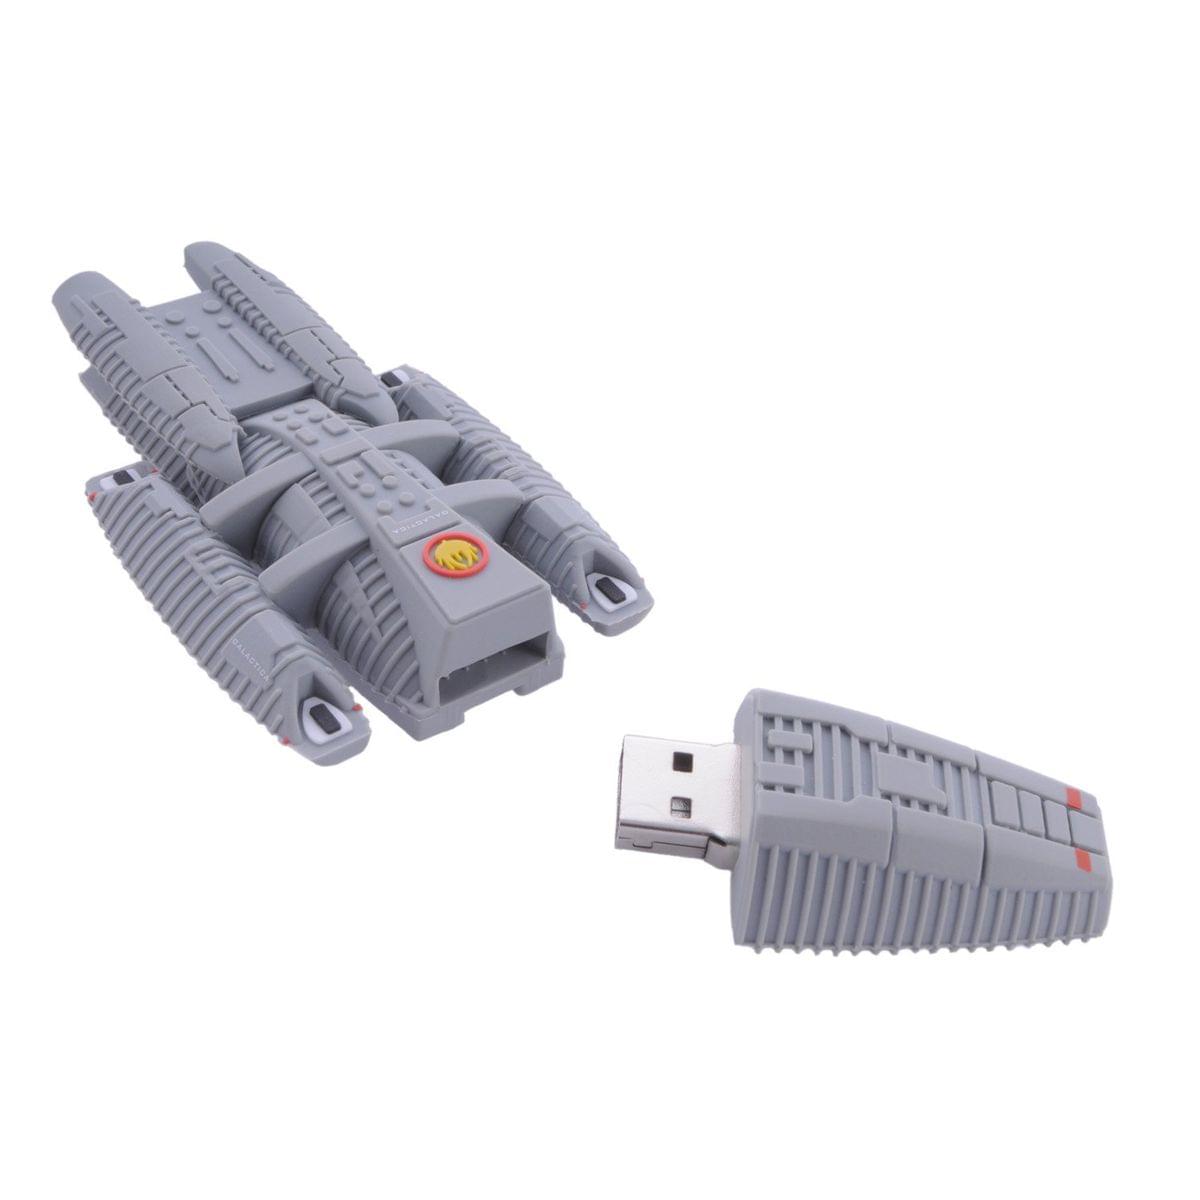 Battlestar Galactica Ship Scaled 4GB USB Flash Drive